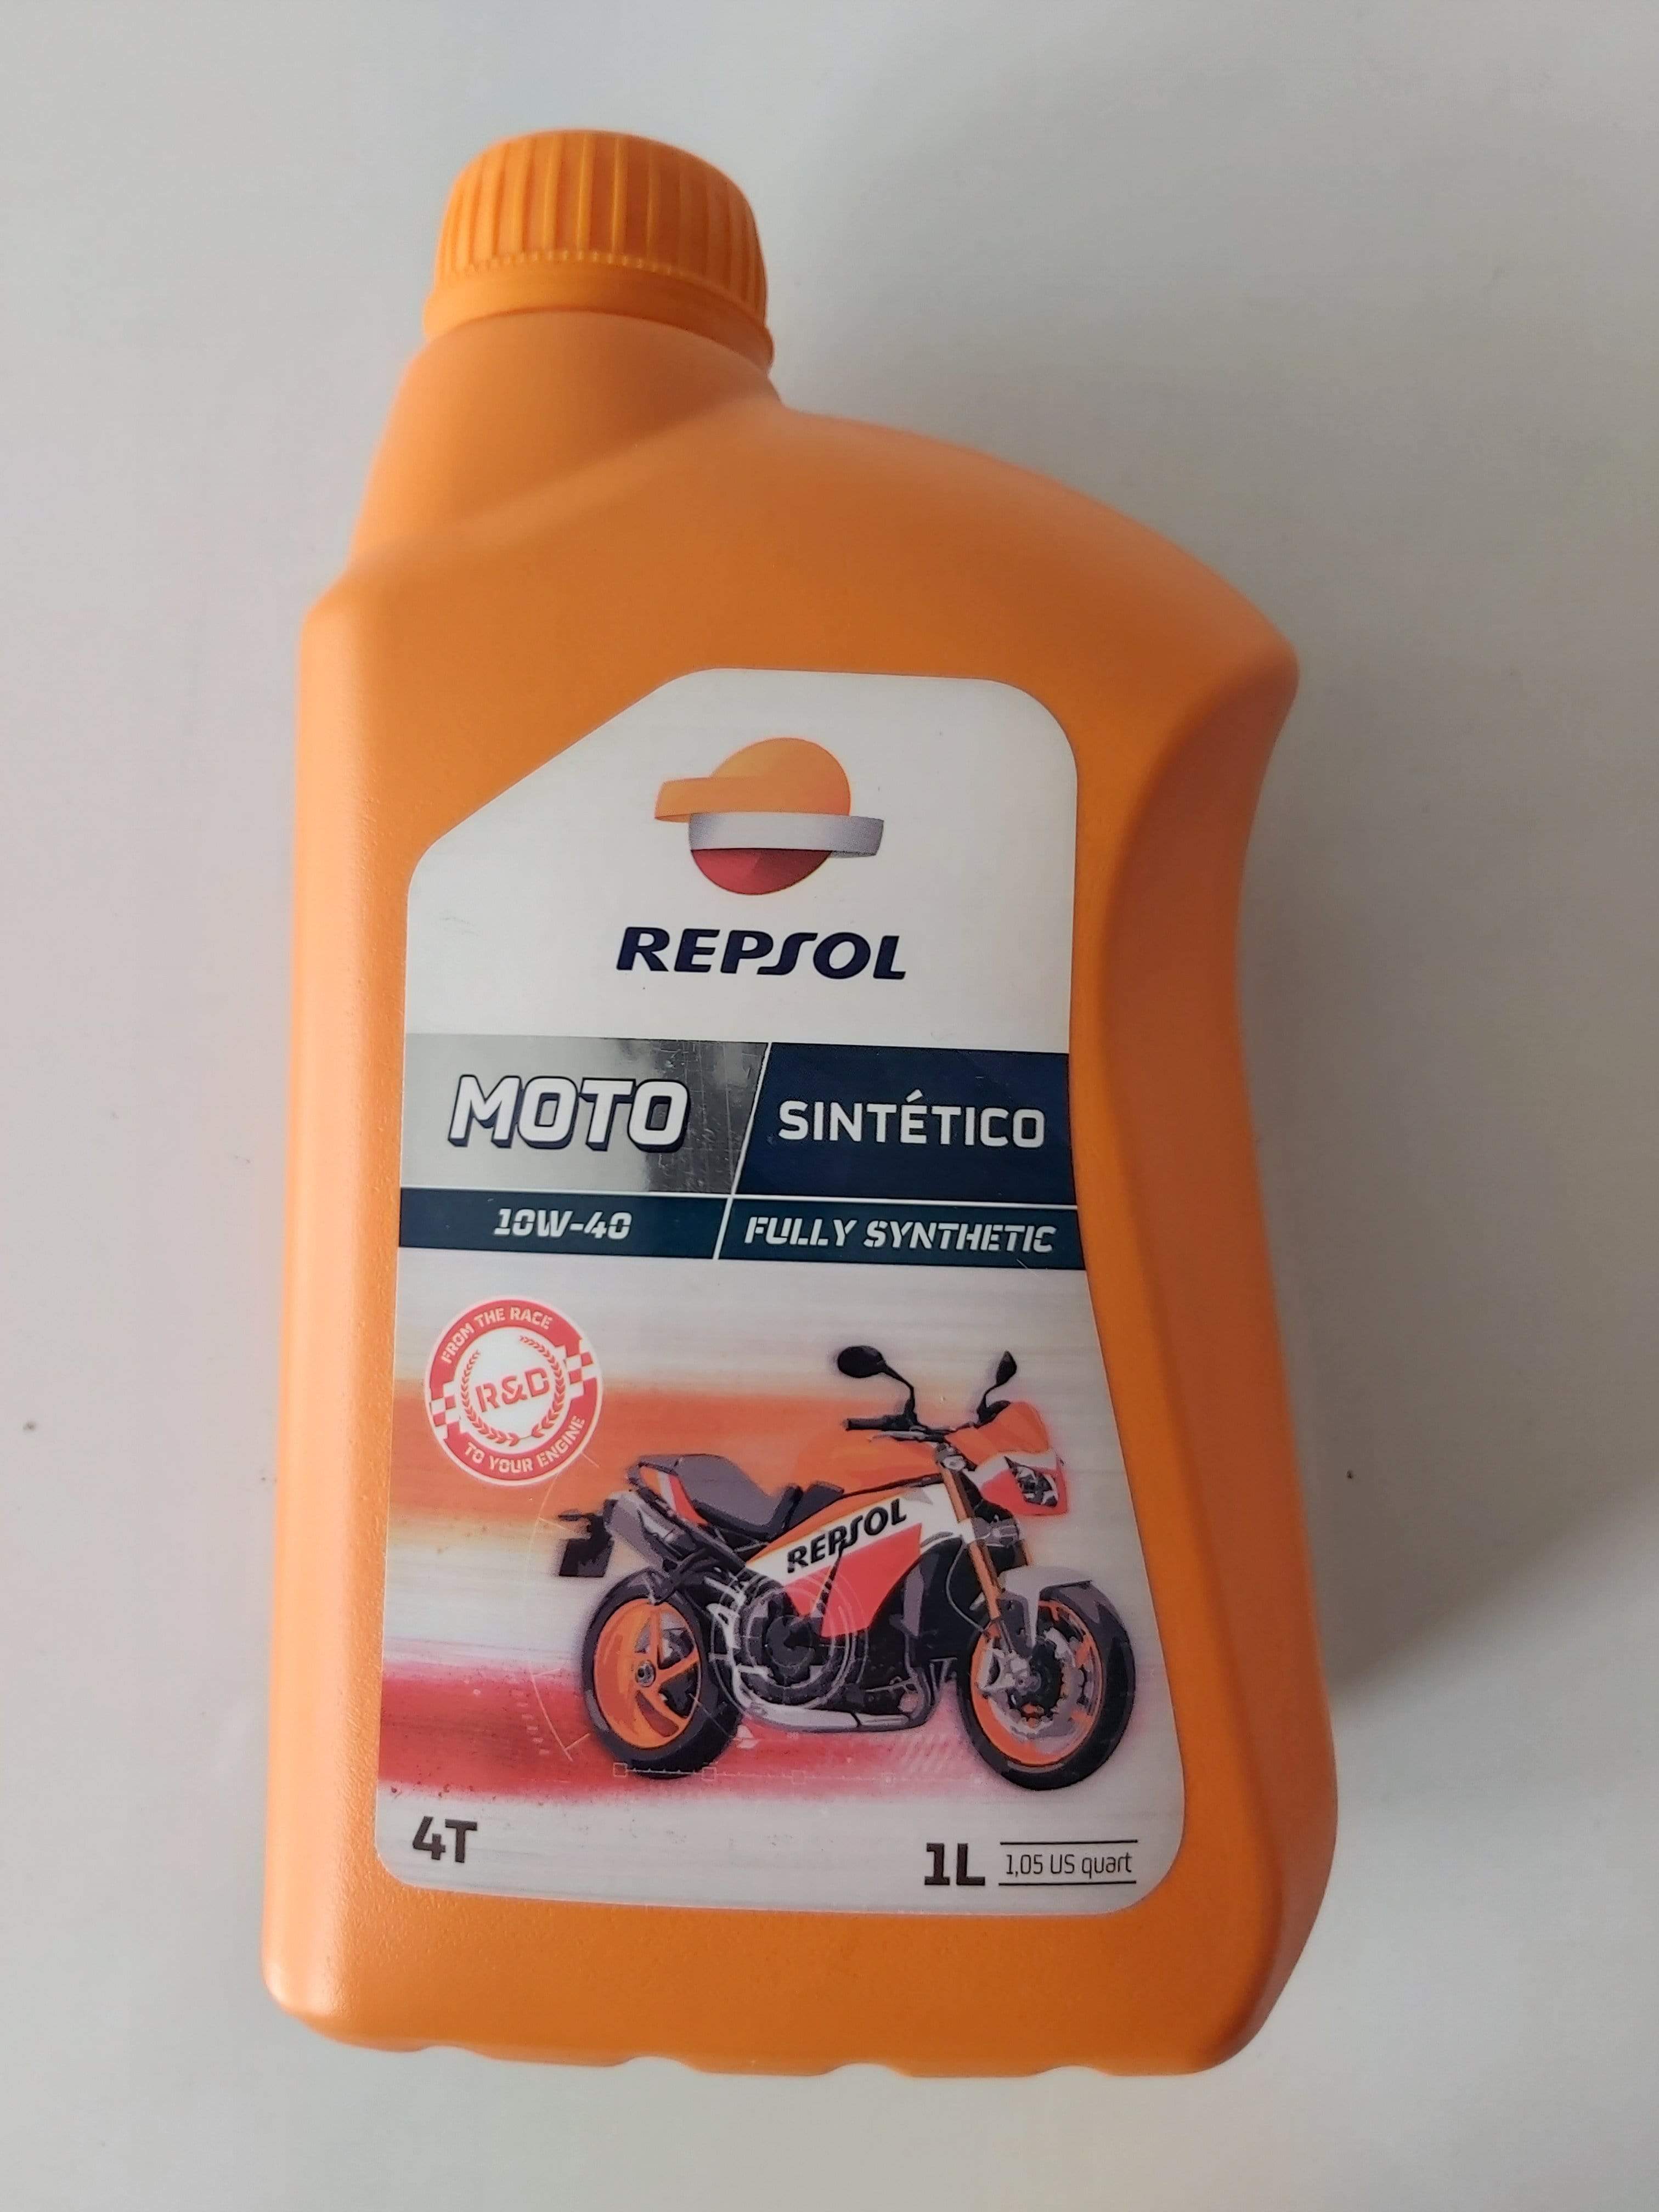 REPSOL MOTO SINTÉTICO 10W-40 FULLY SYNTHETIC - MotoaccesoriosTPR